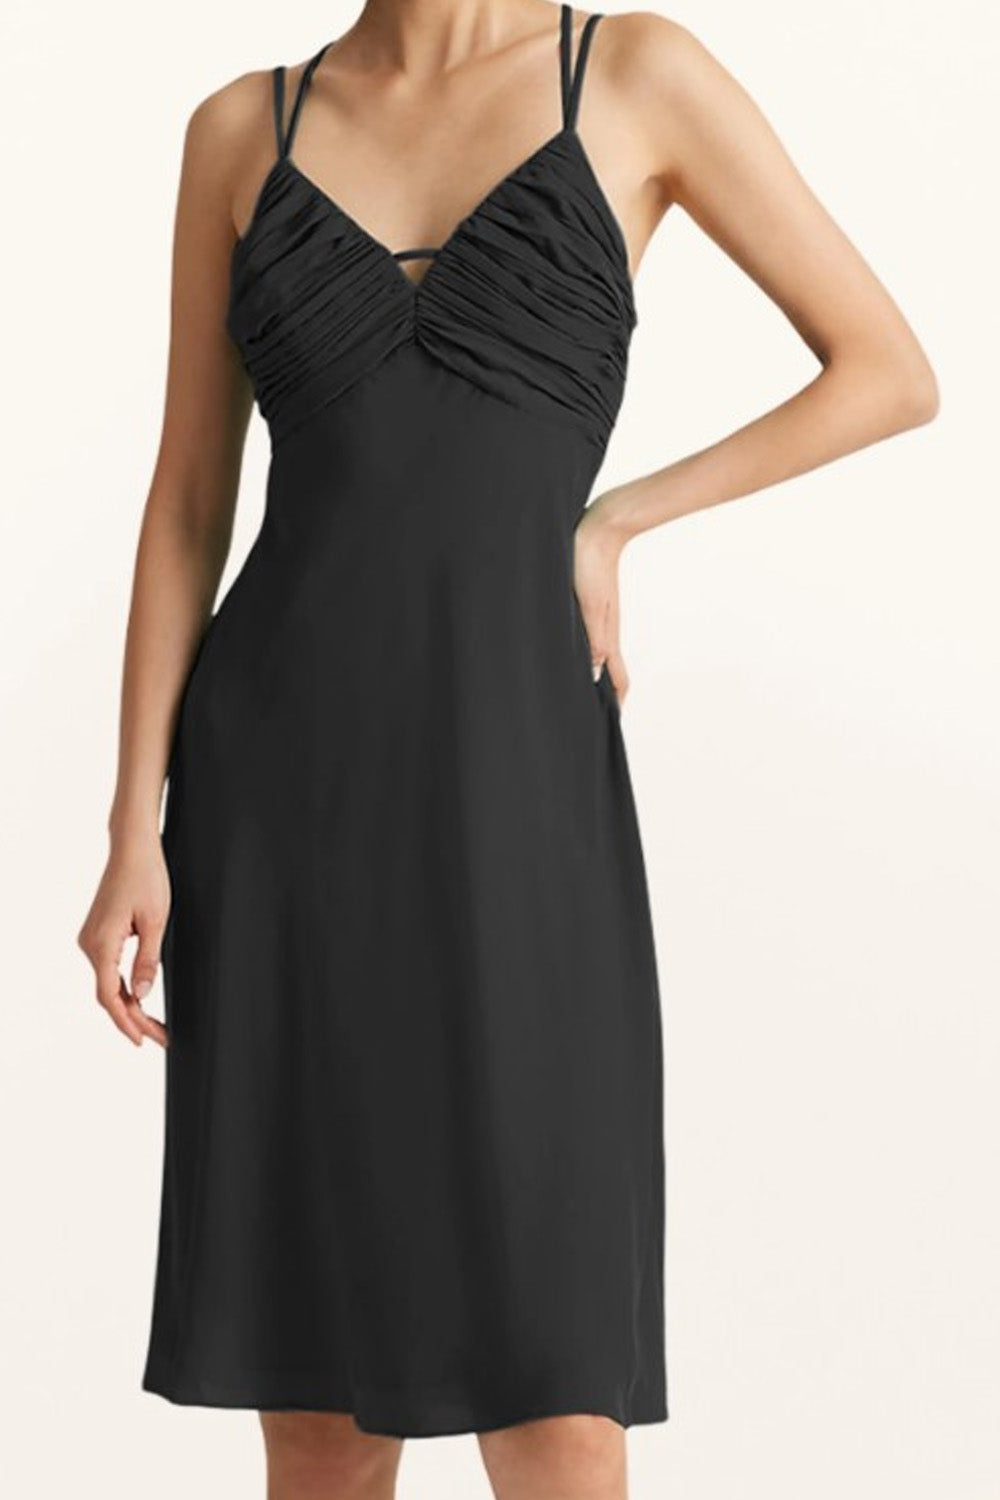 Reserve Black Dress